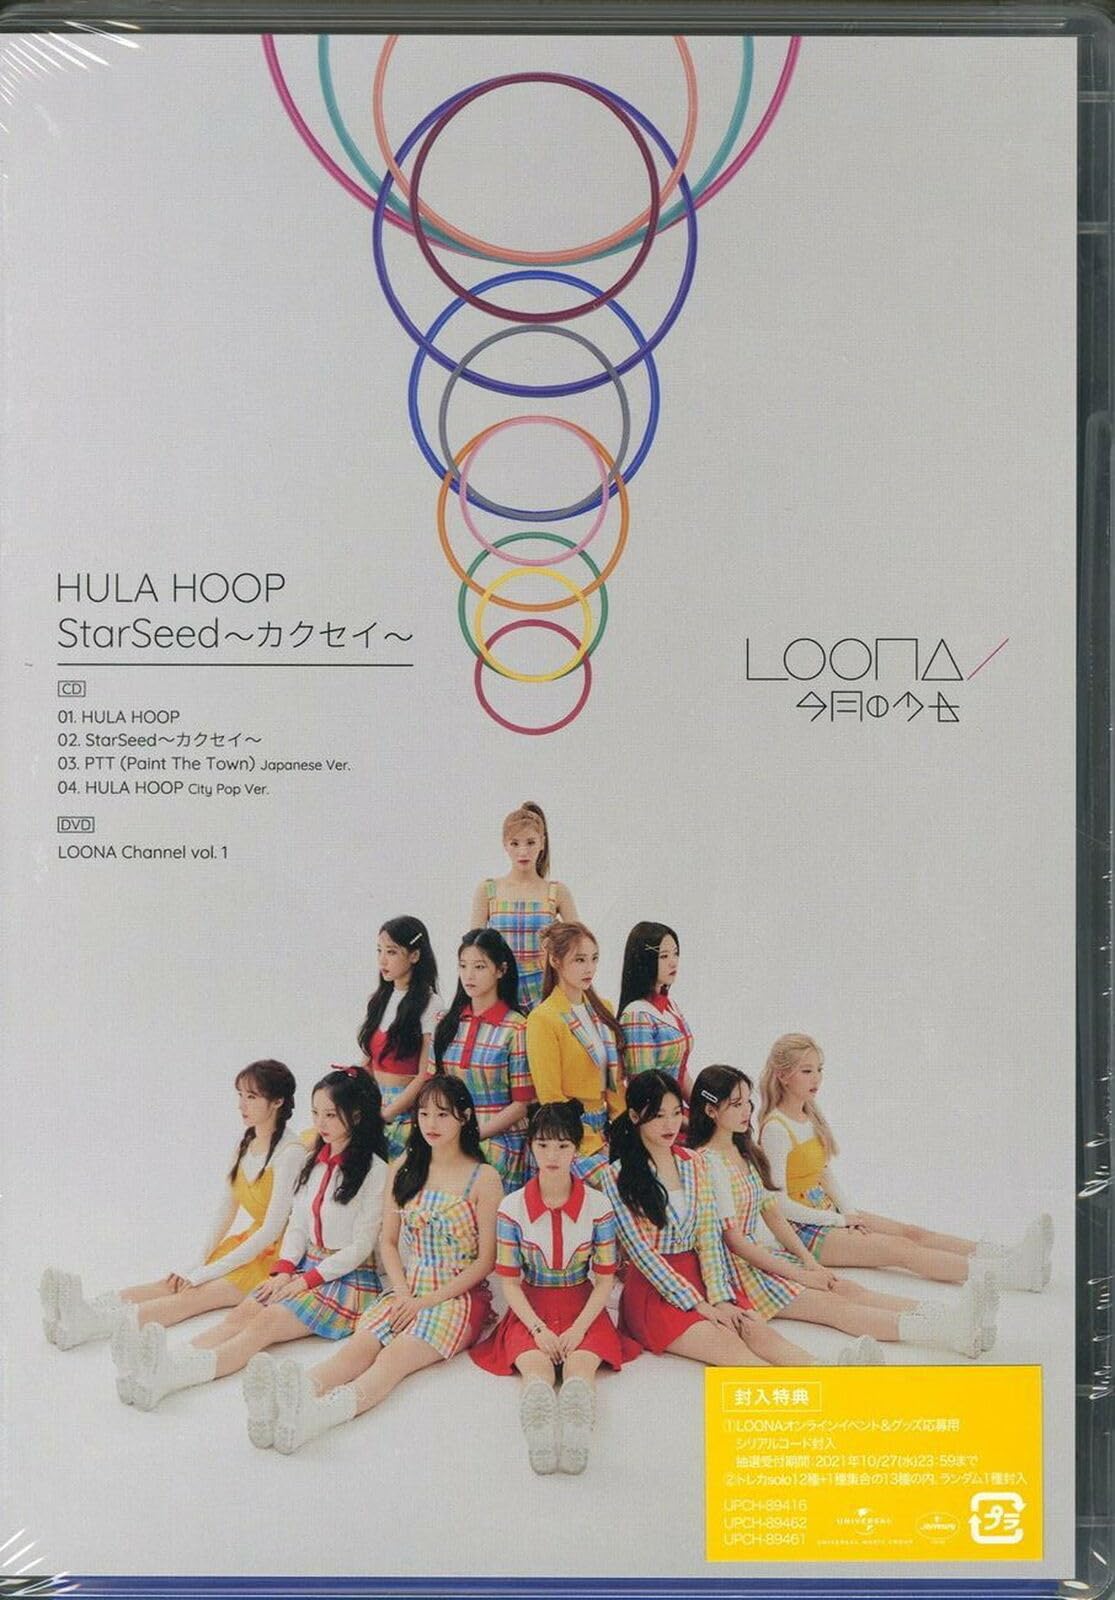 HULA HOOP / StarSeed ~カクセイ~ (初回限定盤B)(DVD付)(特典:なし)